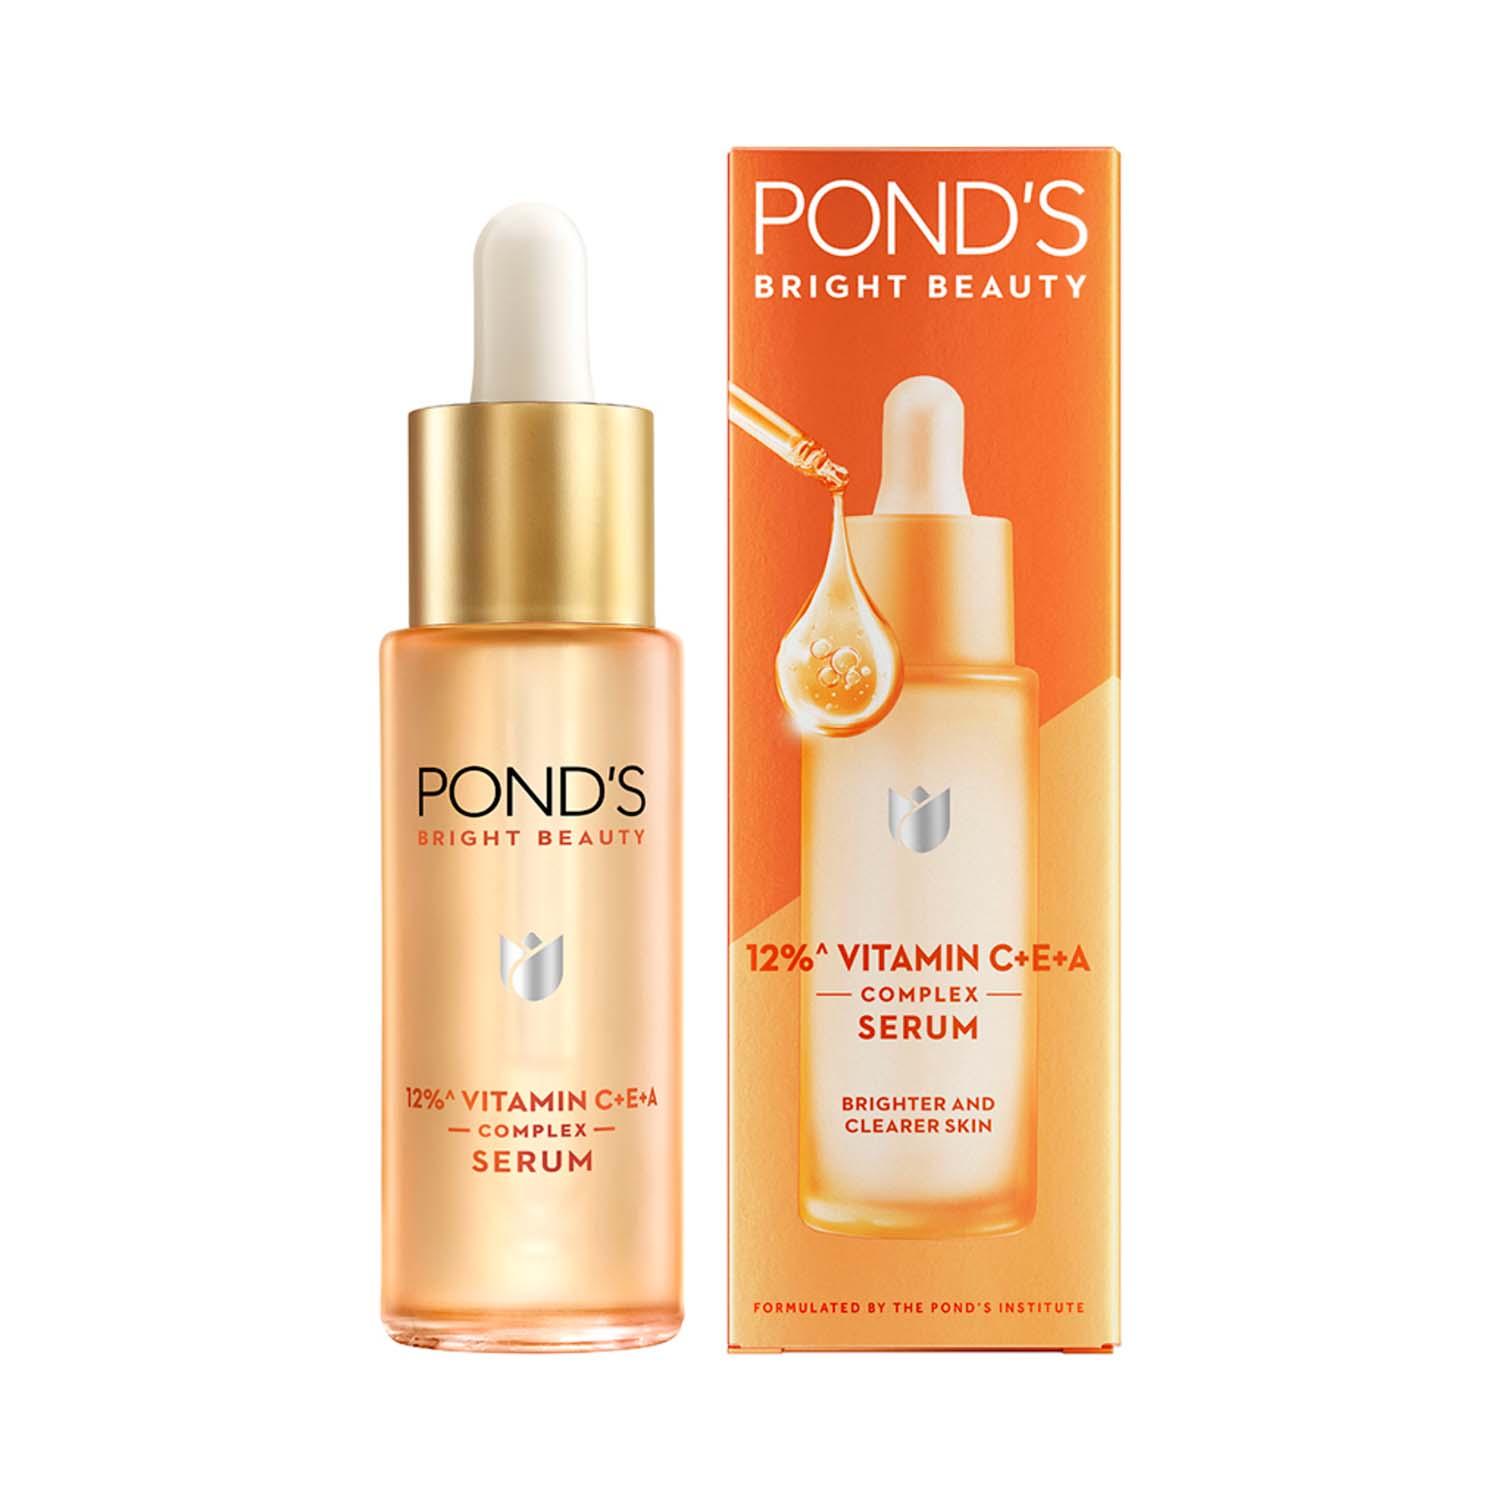 Pond's | Pond's Bright Beauty 12% Vit C+E+A Serum (28 ml)